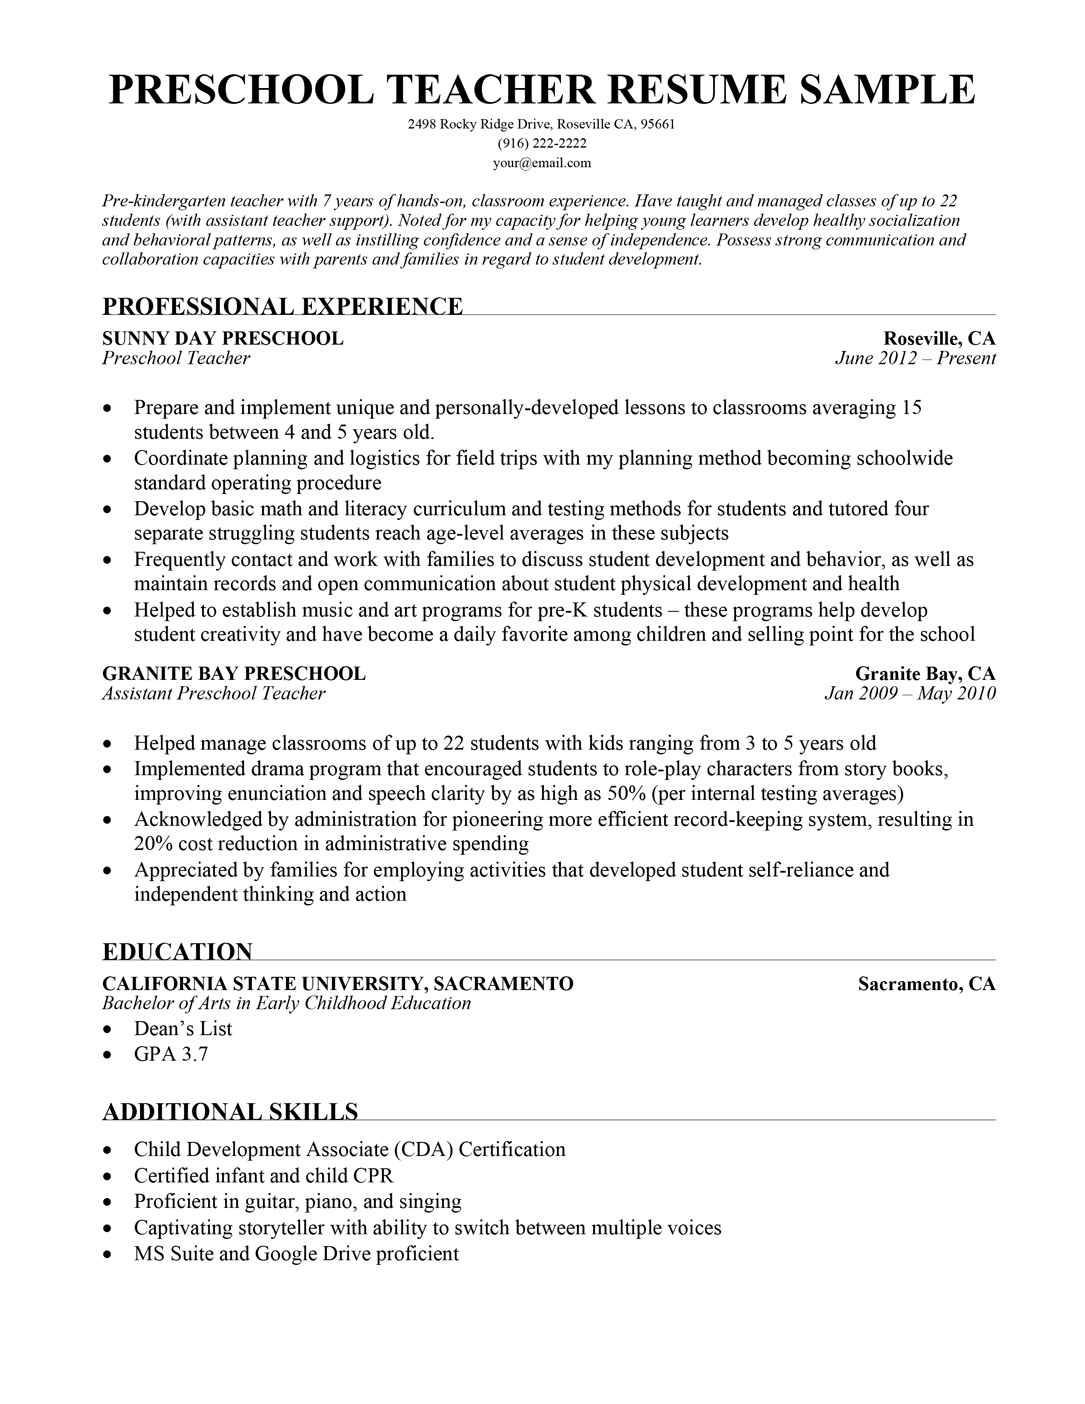 Preschool teacher resume sample